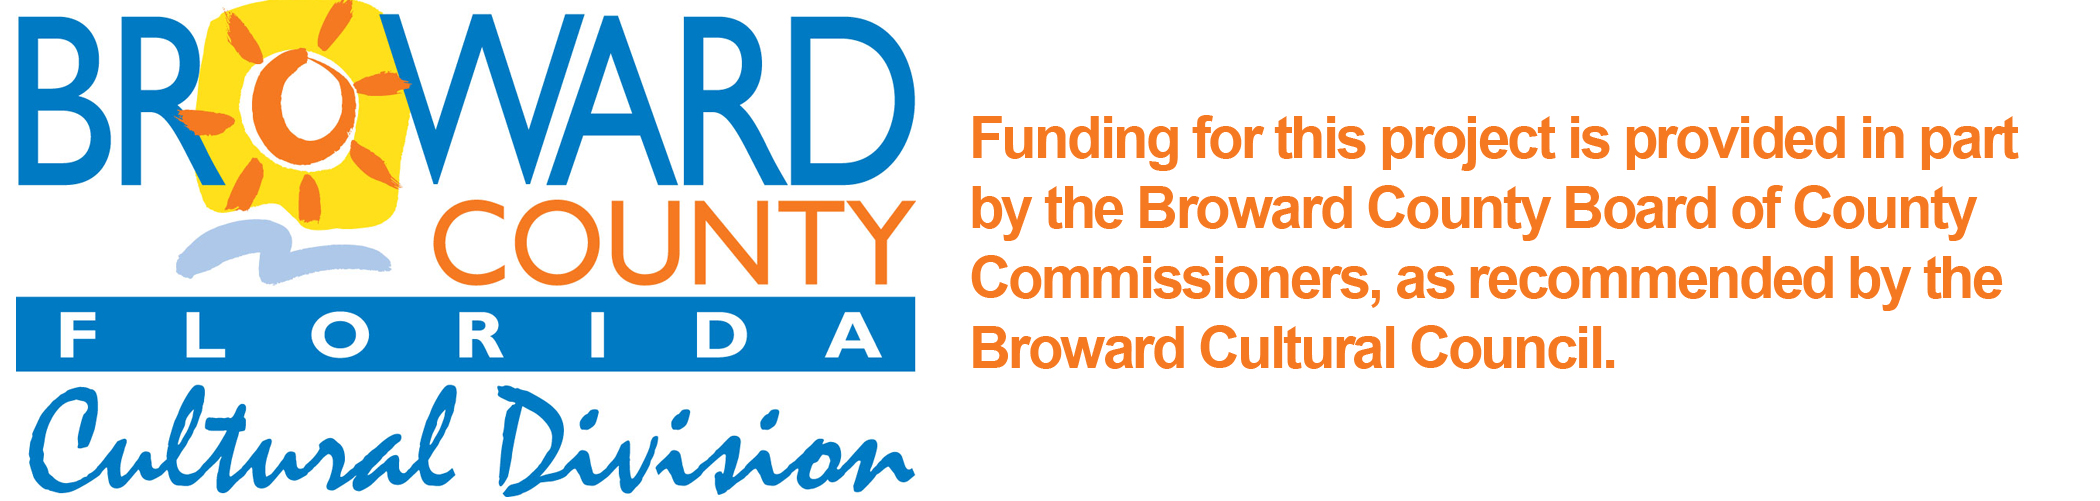 Broward County Cultural Division logo -color